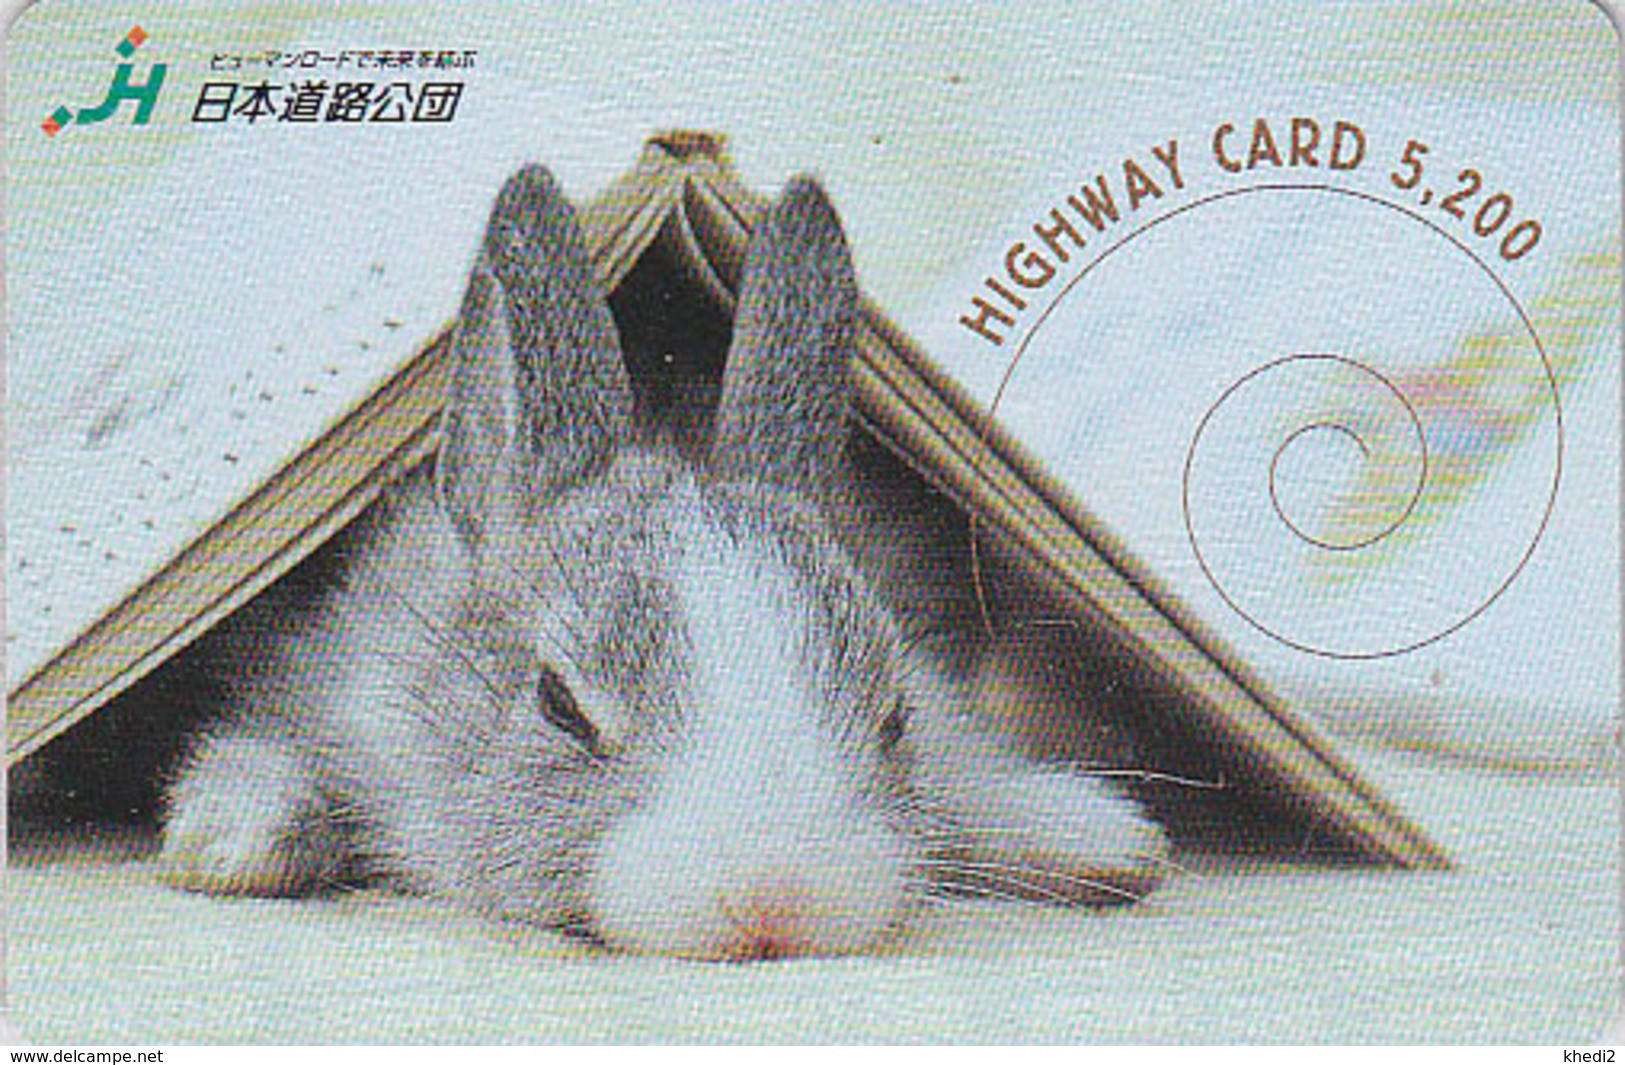 Carte Prépayée JAPON - ANIMAL - LAPIN - RABBIT - KANINCHEN - CONEJO - KONIJN JAPAN Prepaid Highway Card - HW 326 - Rabbits